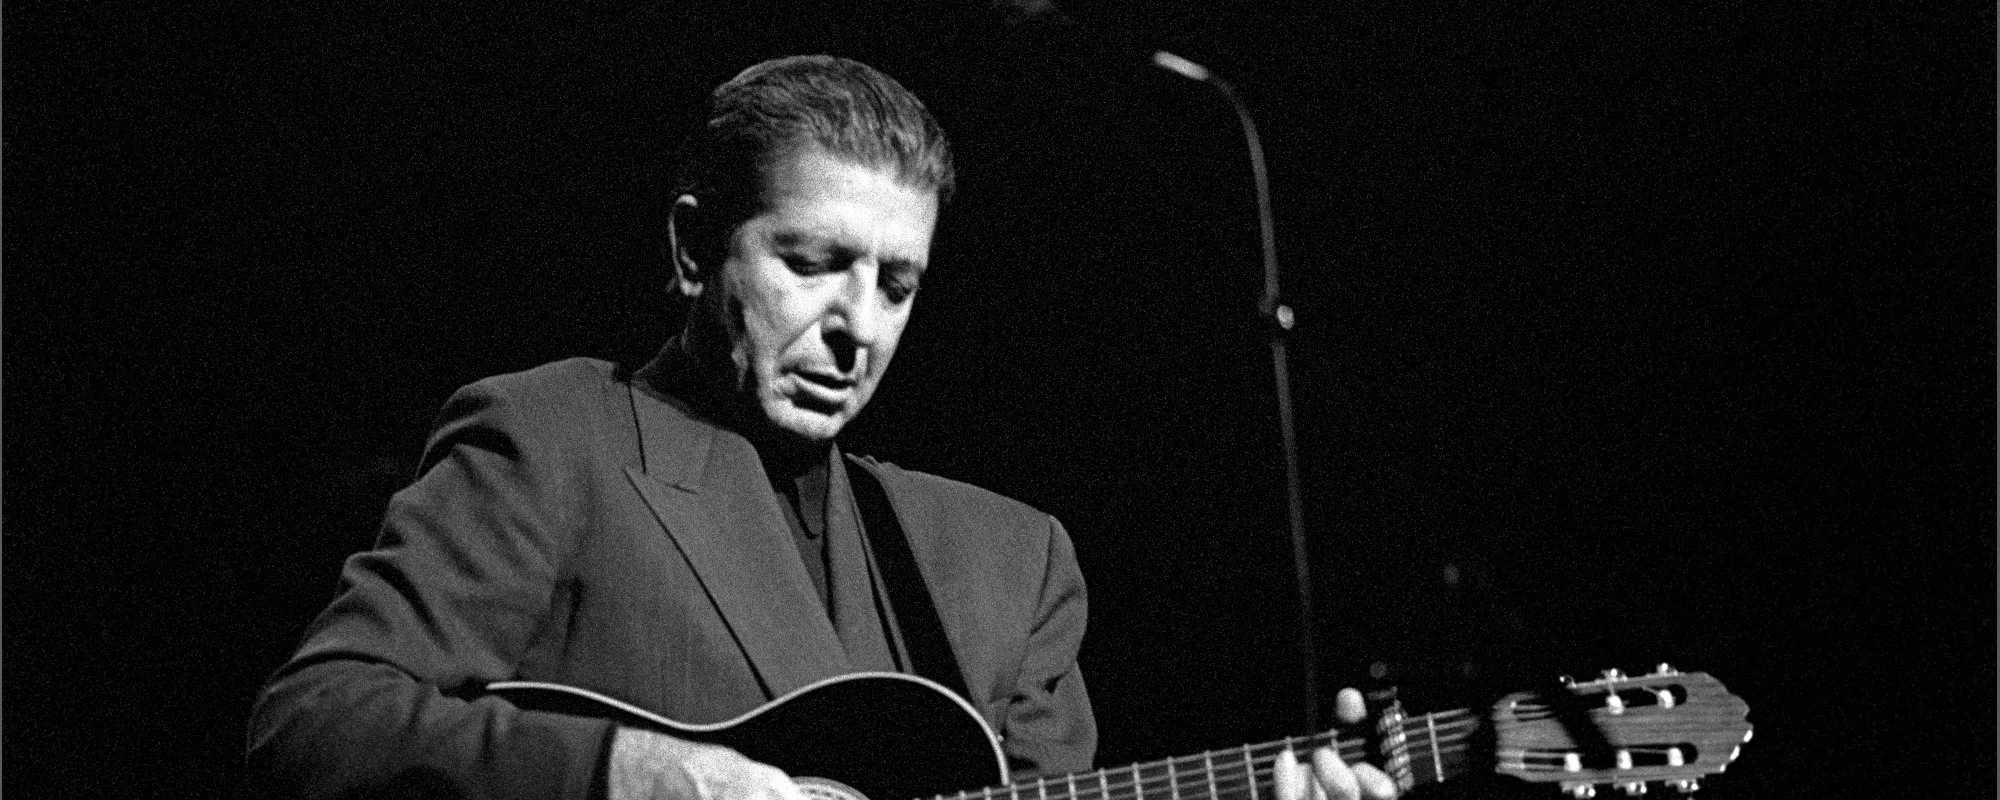 Meet the Writer Behind “Hallelujah” by Leonard Cohen